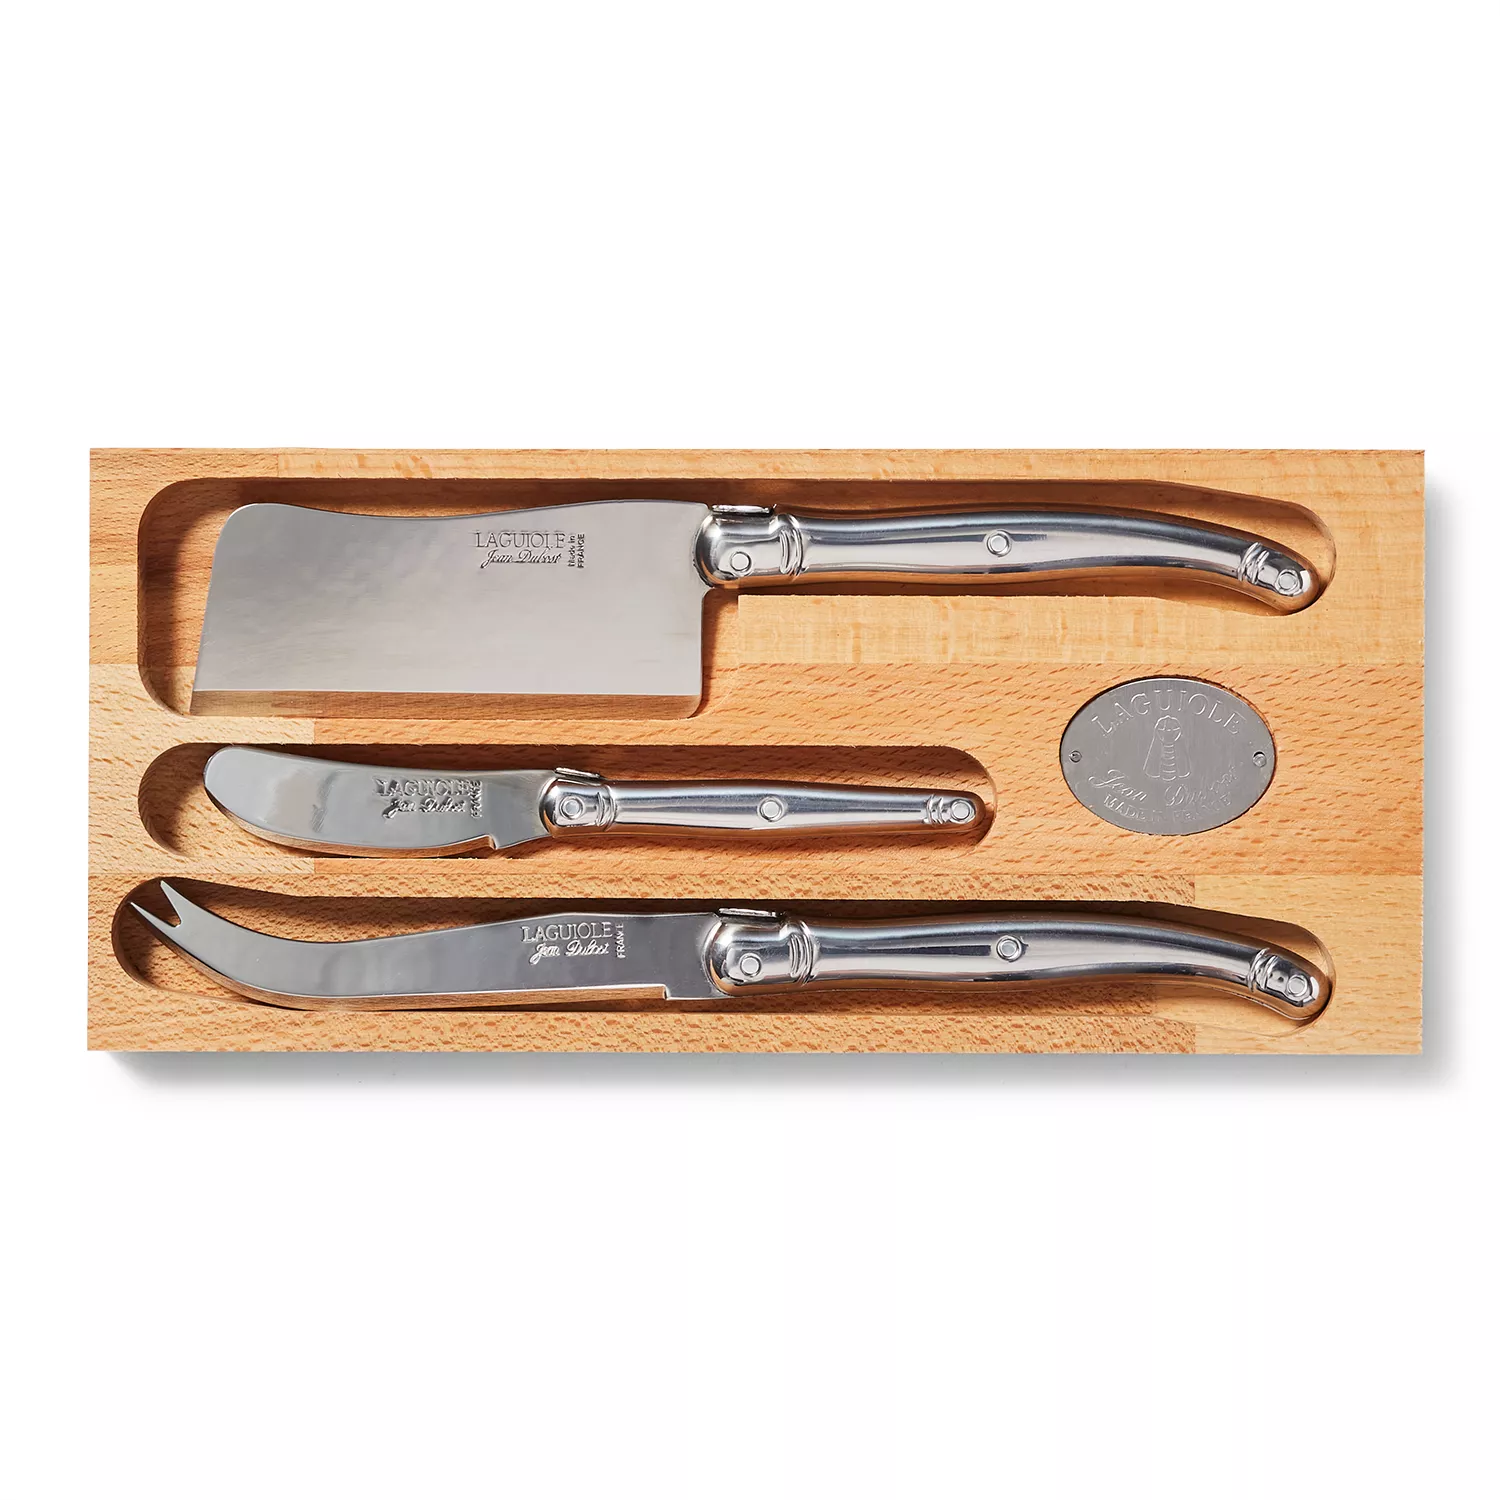 Coppercraft Guild Serving Utensil Set Spoon Knife Cute Little Fork